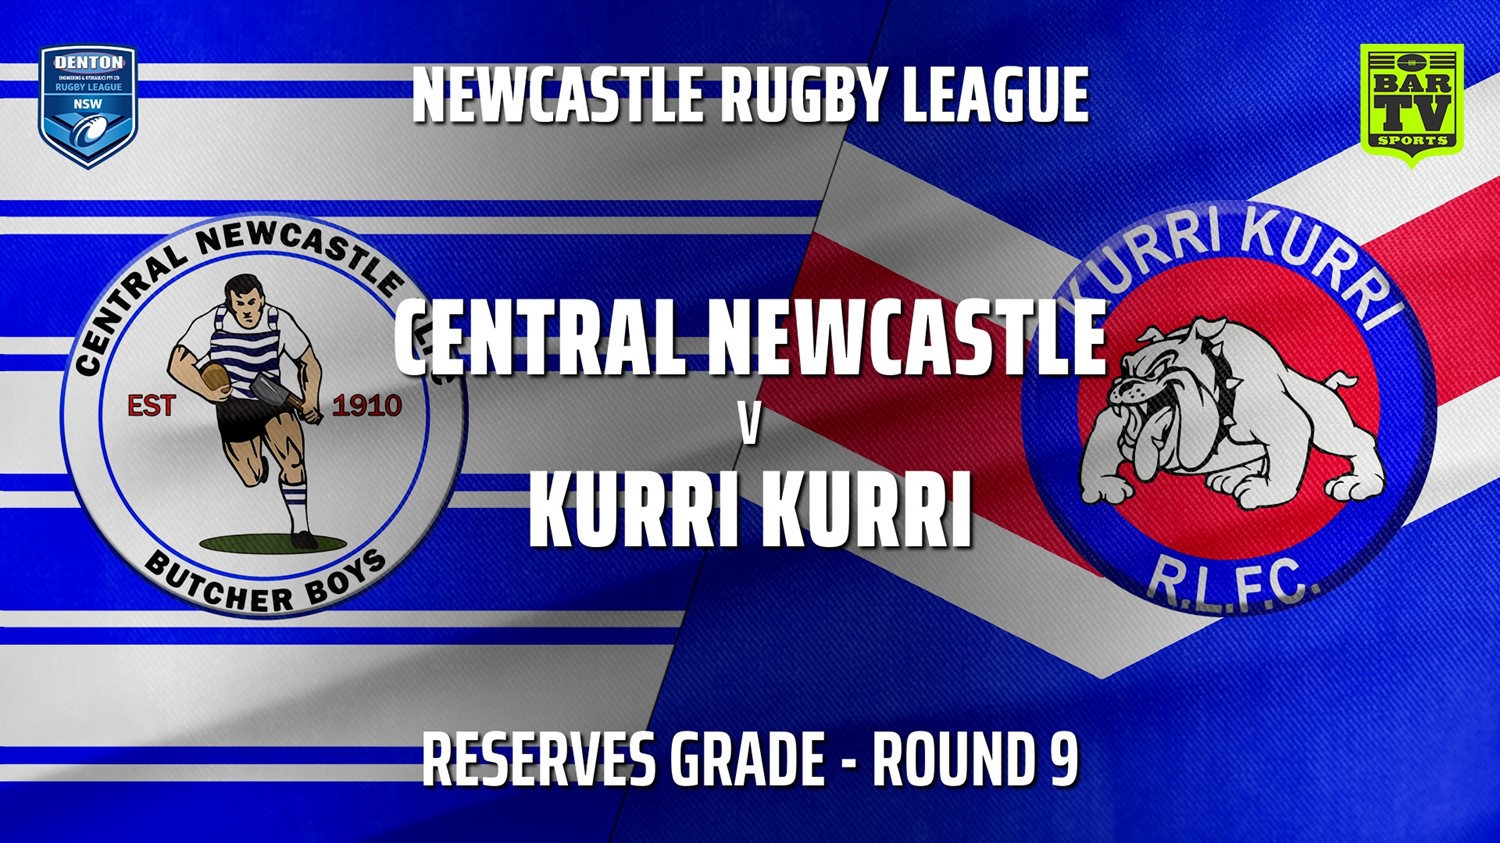 210613-Newcastle Round 9 - Reserves Grade - Central Newcastle v Kurri Kurri Bulldogs Slate Image